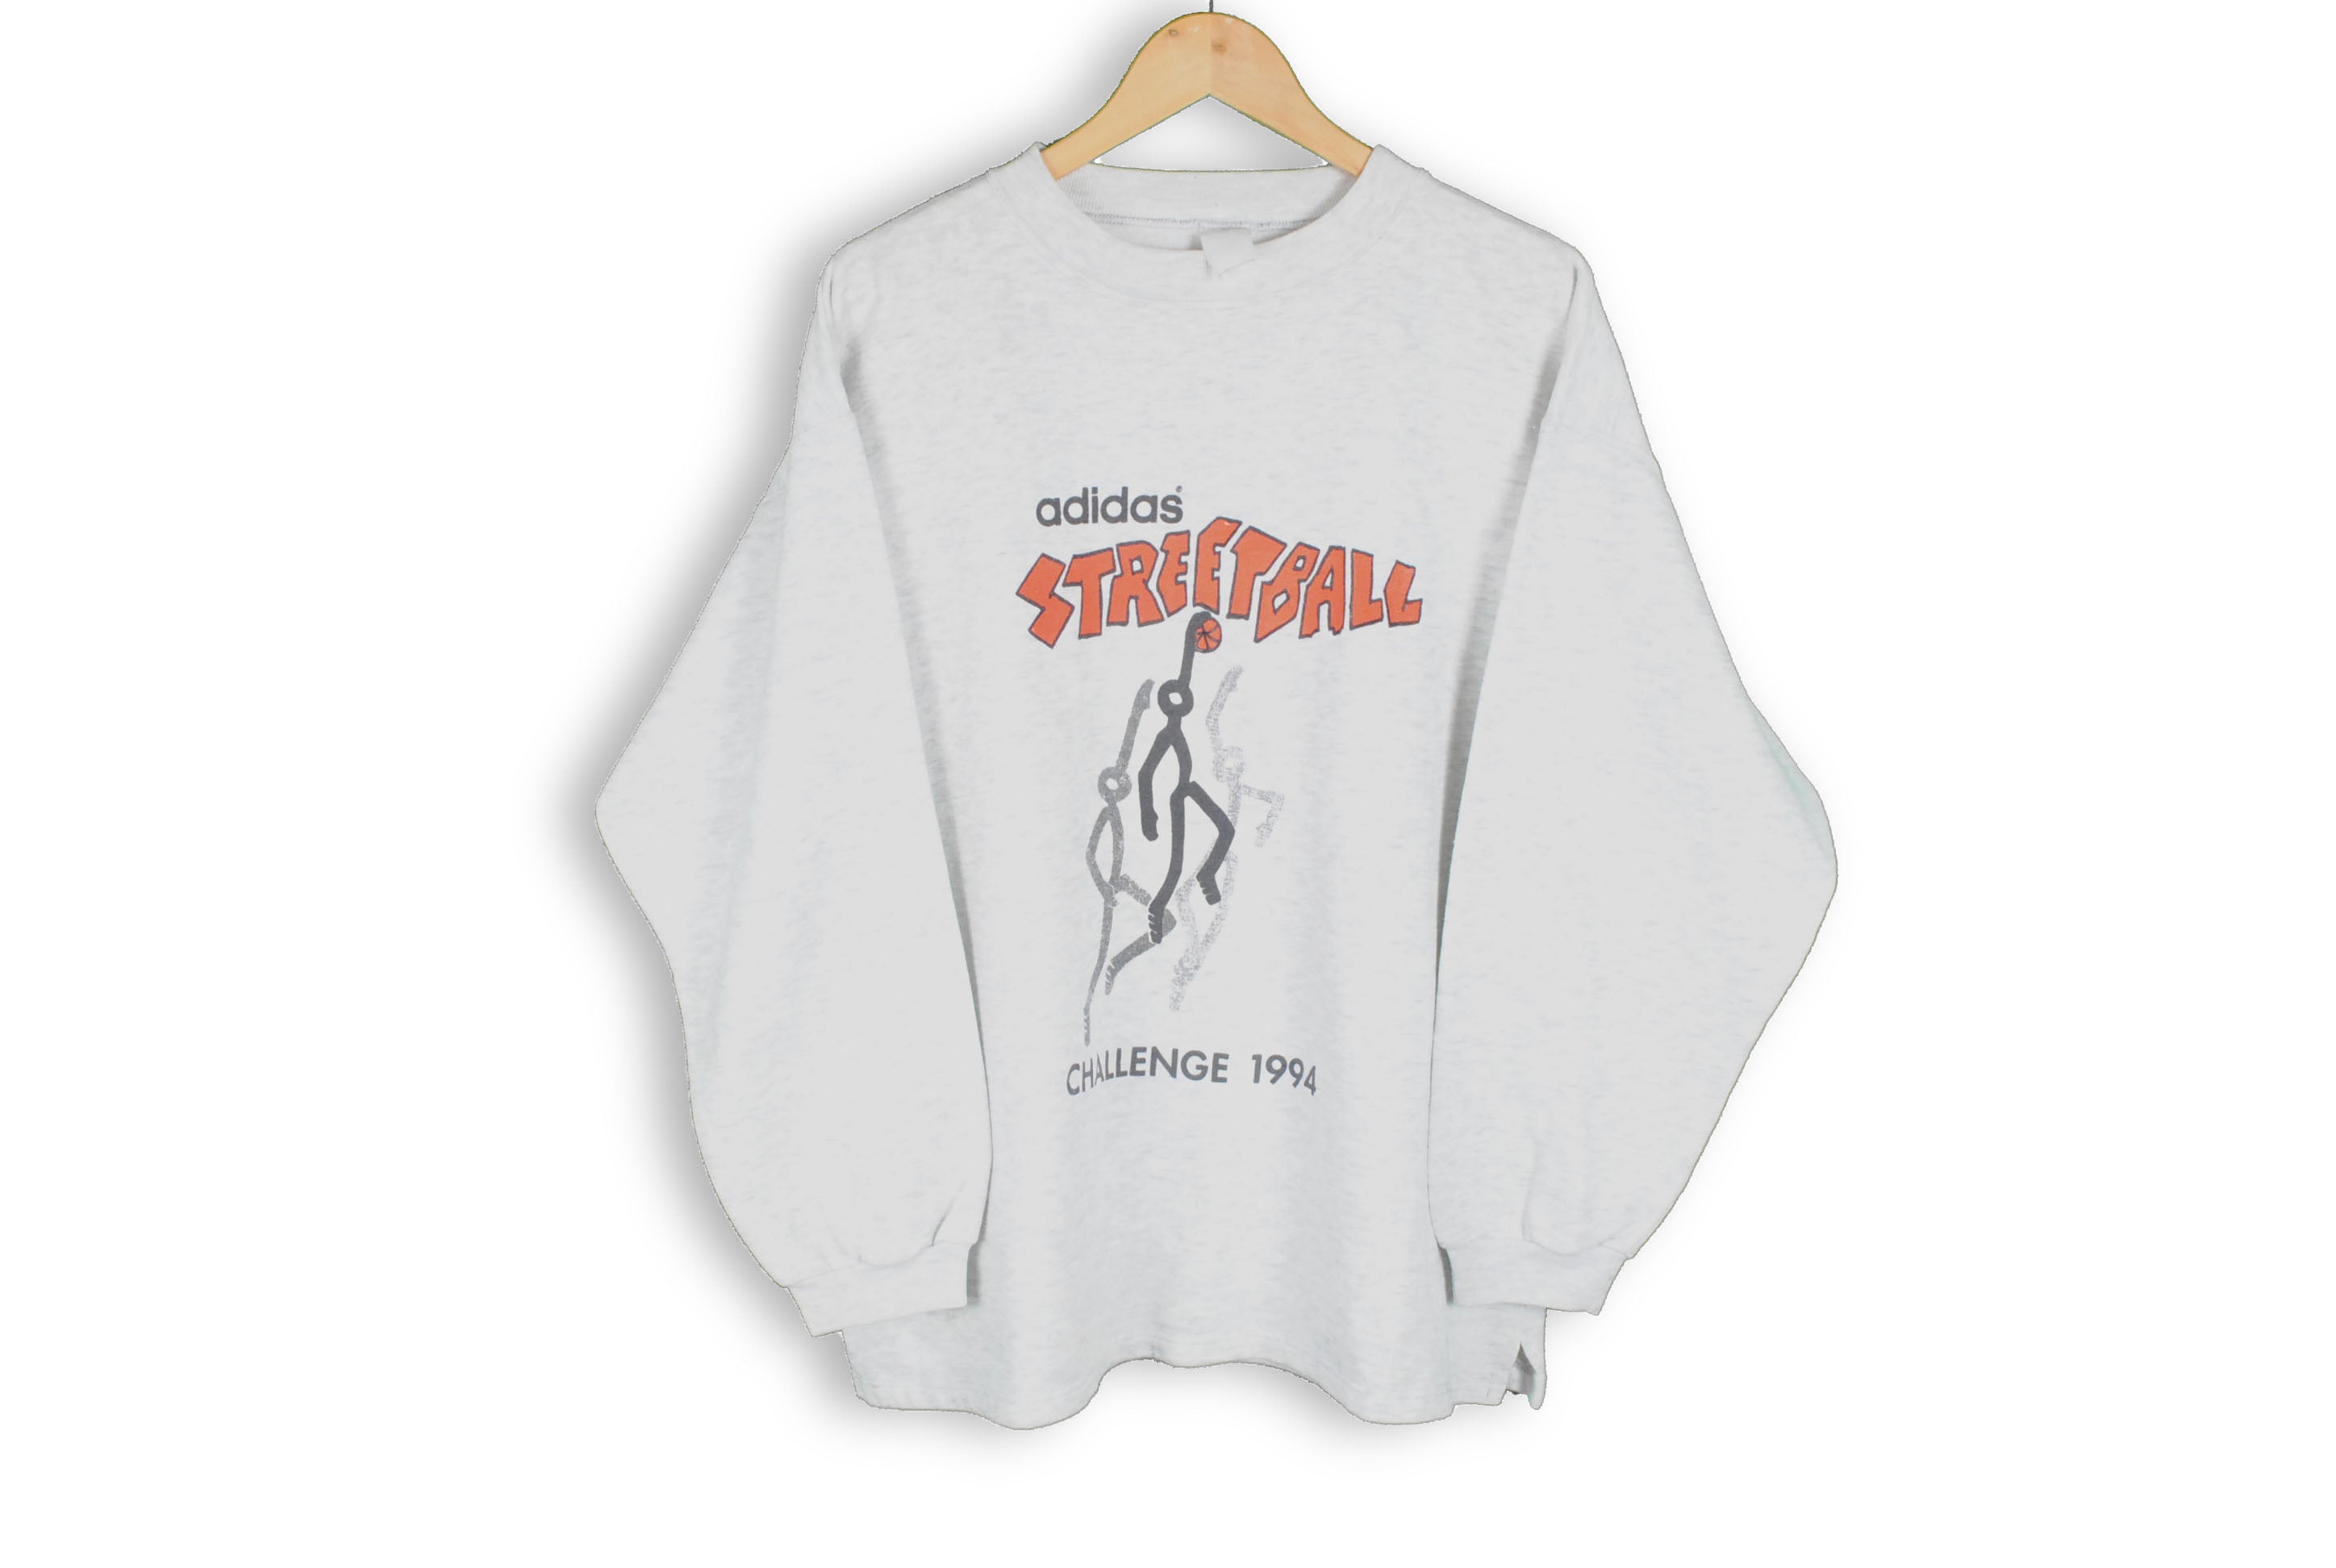 Empeorando siglo Piñón Vintage Adidas Streetball 1994 Sweatshirt – dla dushy